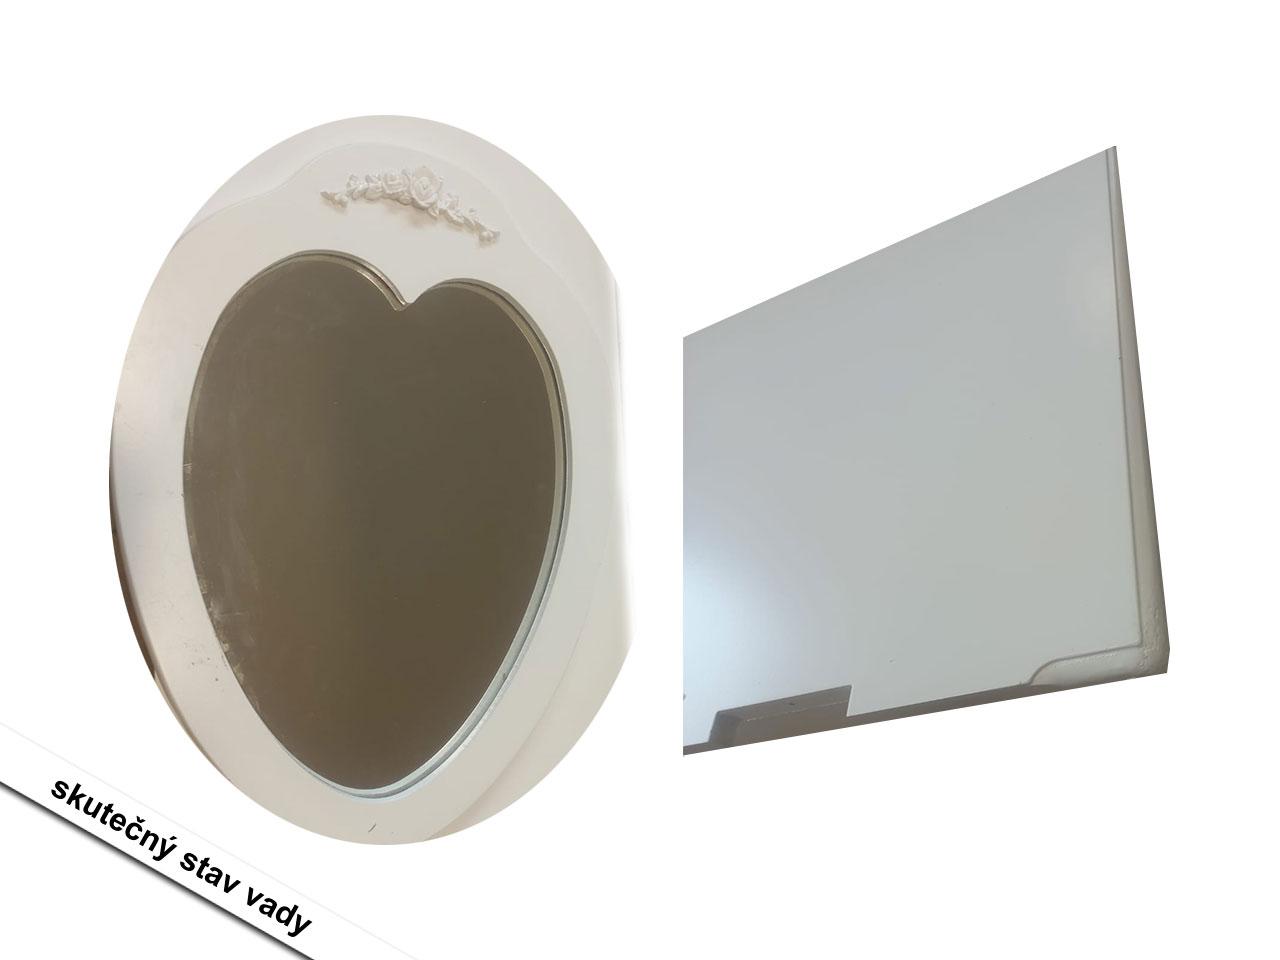 Toaletní stolek Julia 28124, kosmetický stolek se zrcátkem srdce, taburetem a 4 zásuvkami, 74 x 40 x 138 cm